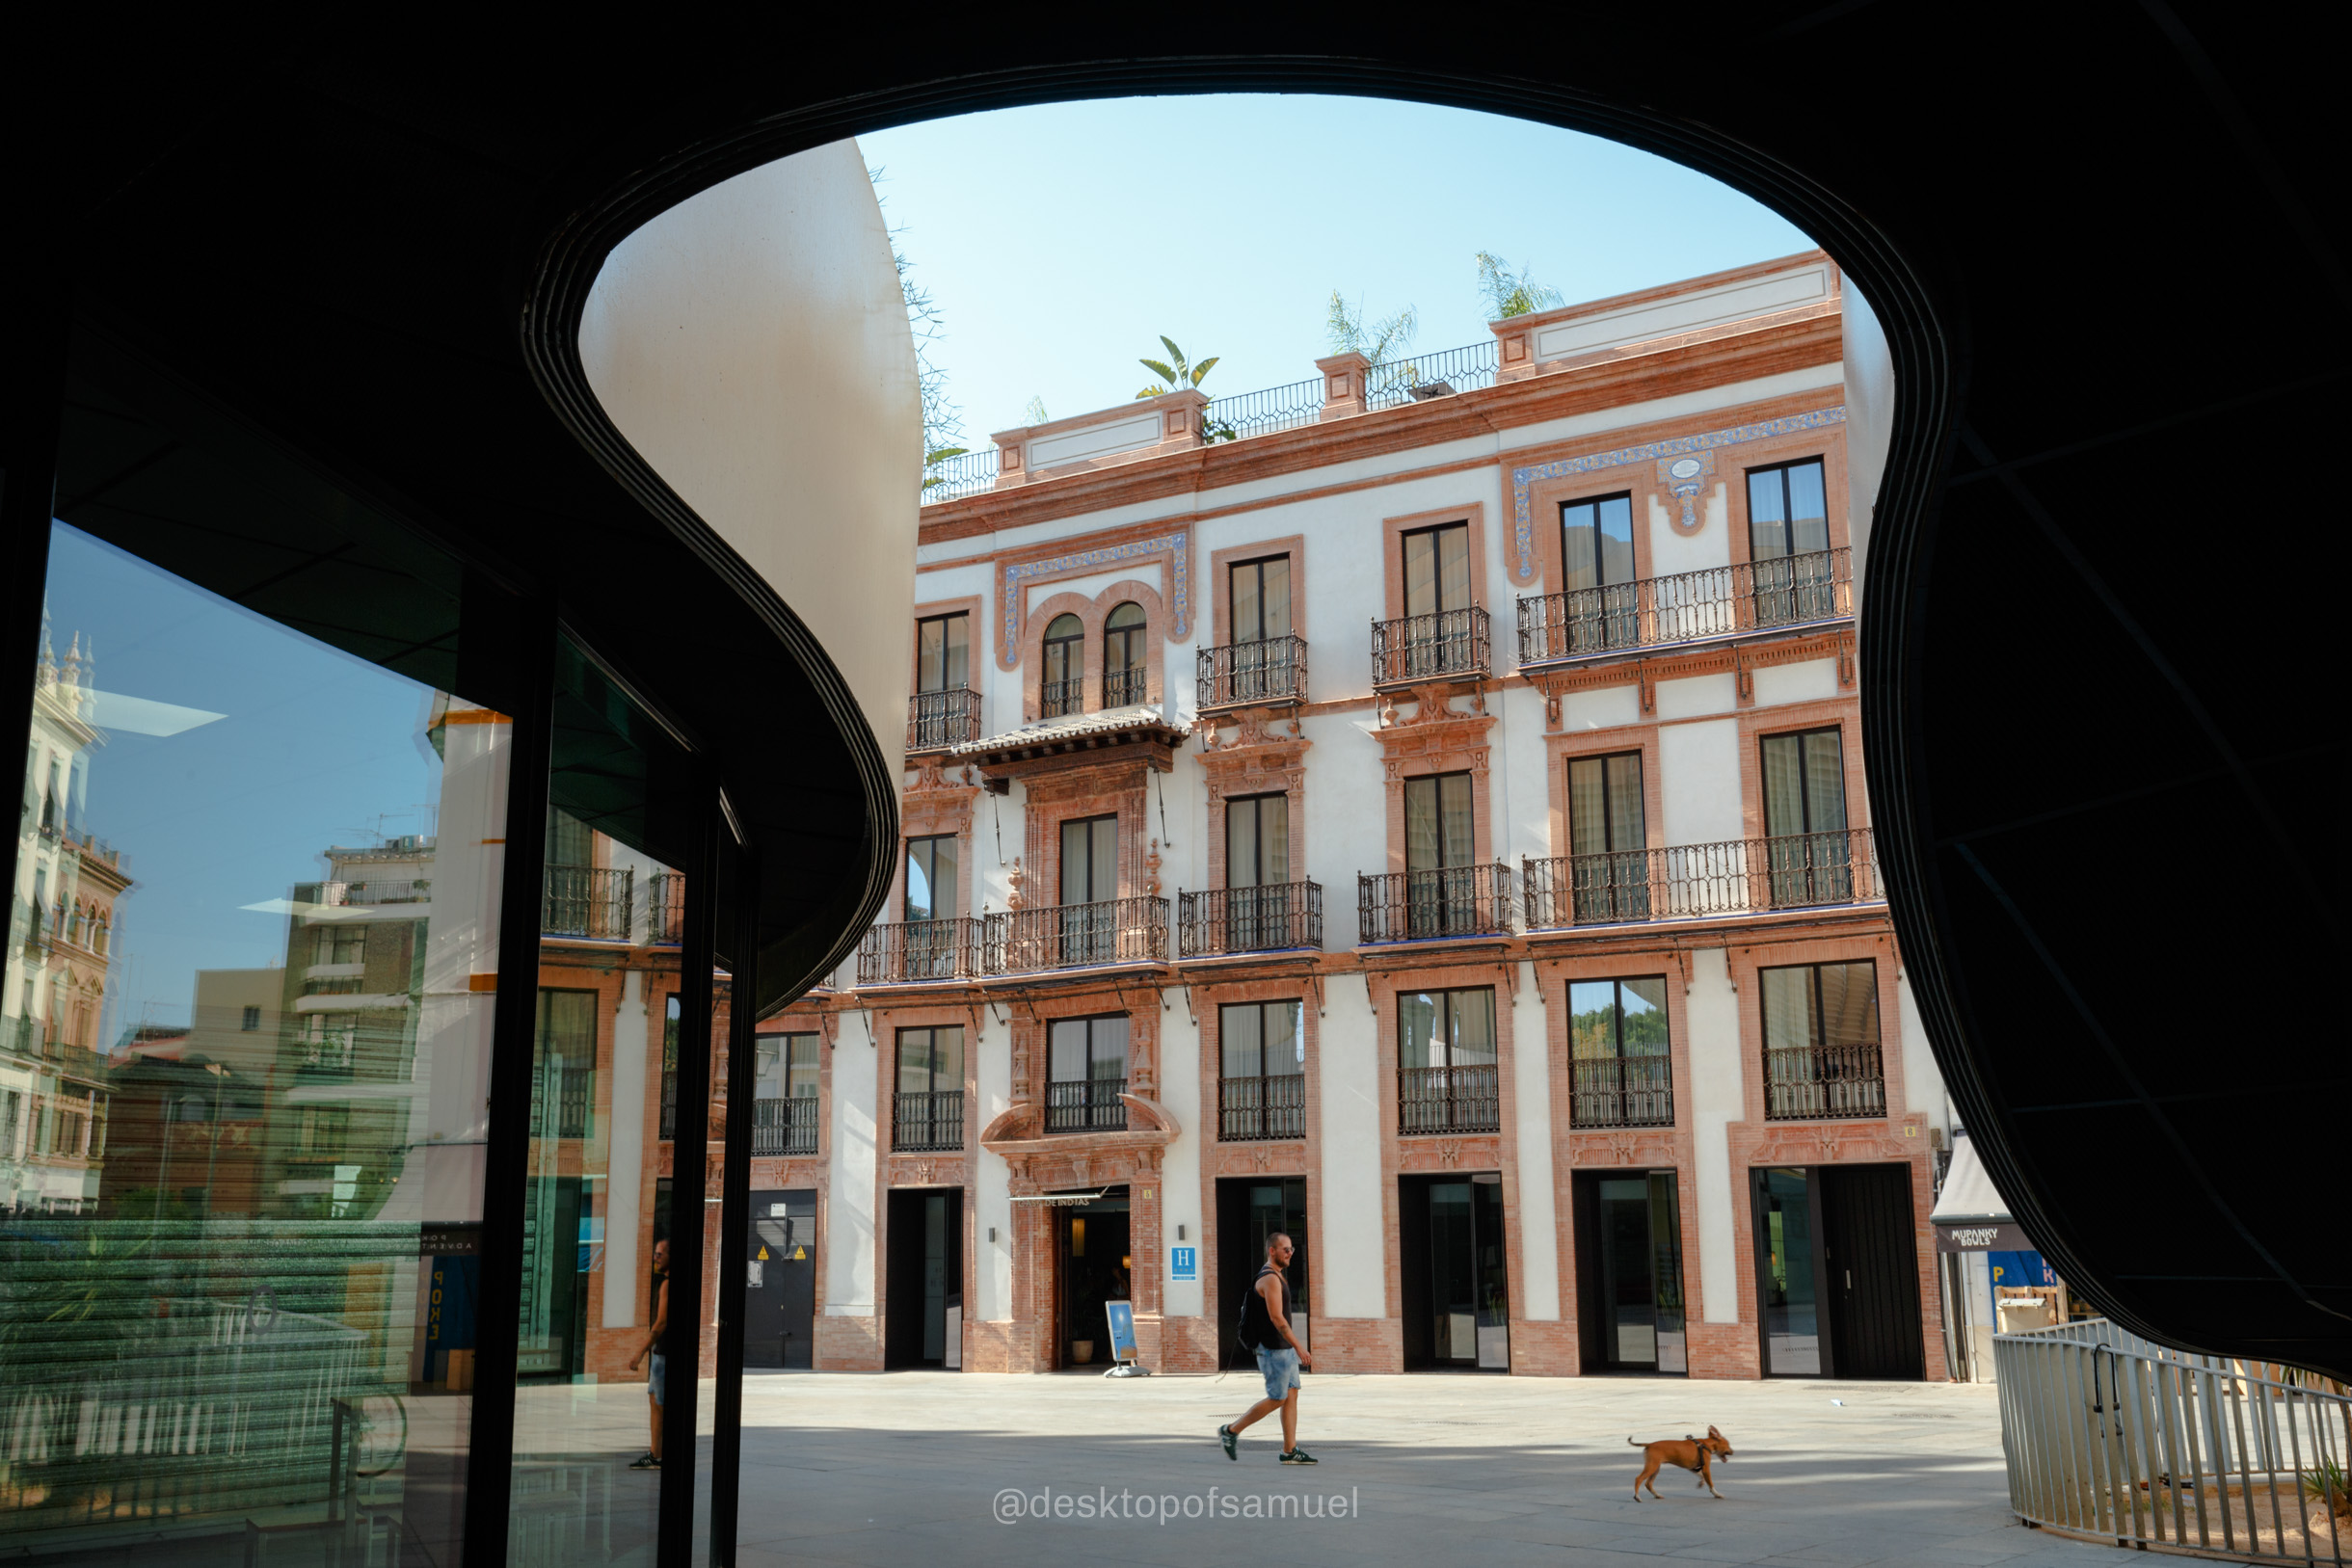 Seville's Architecture